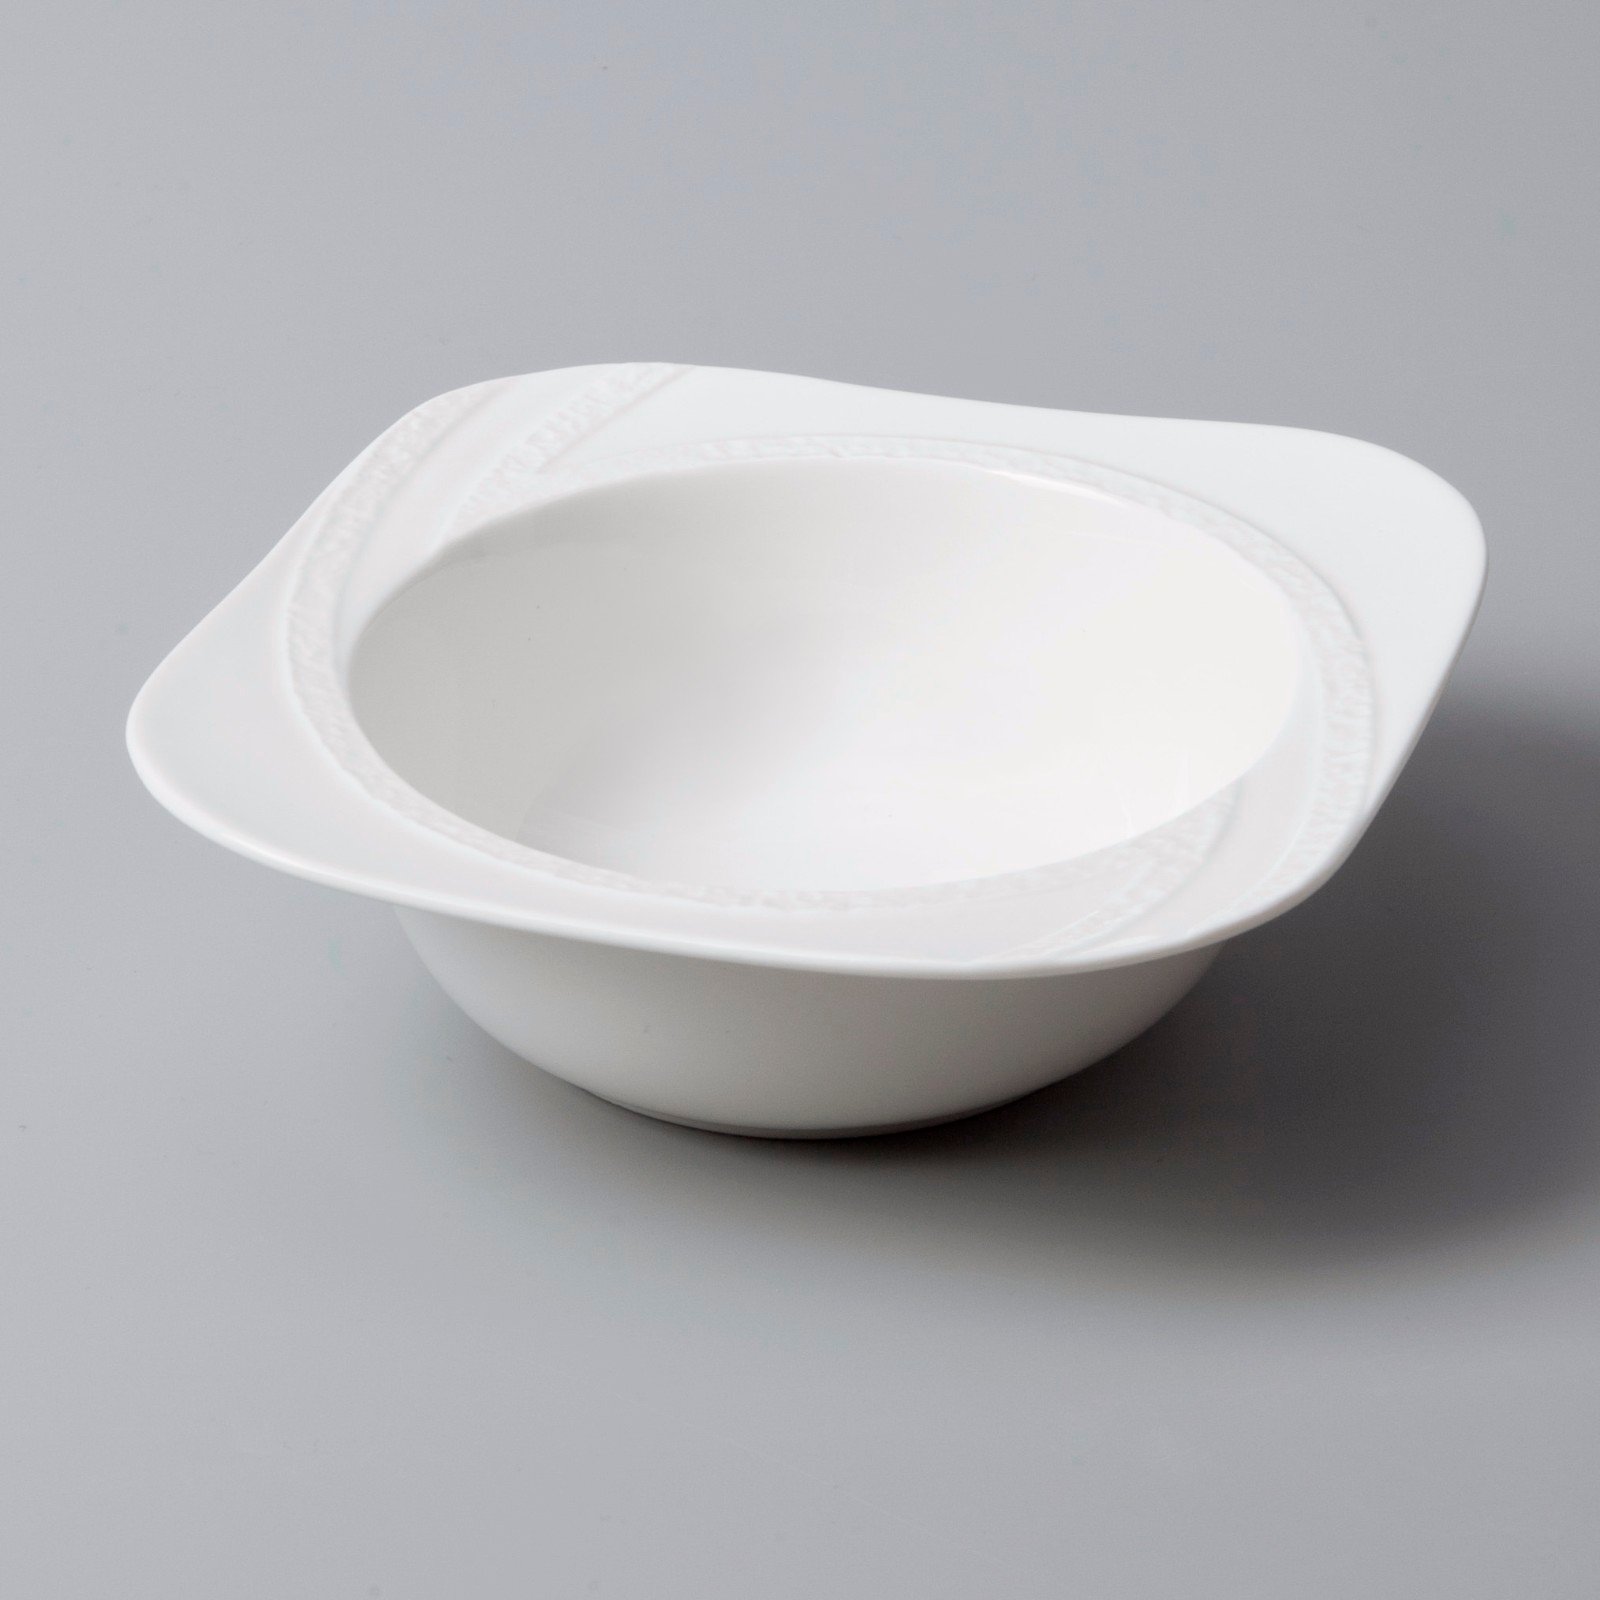 Latest best porcelain dinnerware in the world manufacturers for restaurant-4